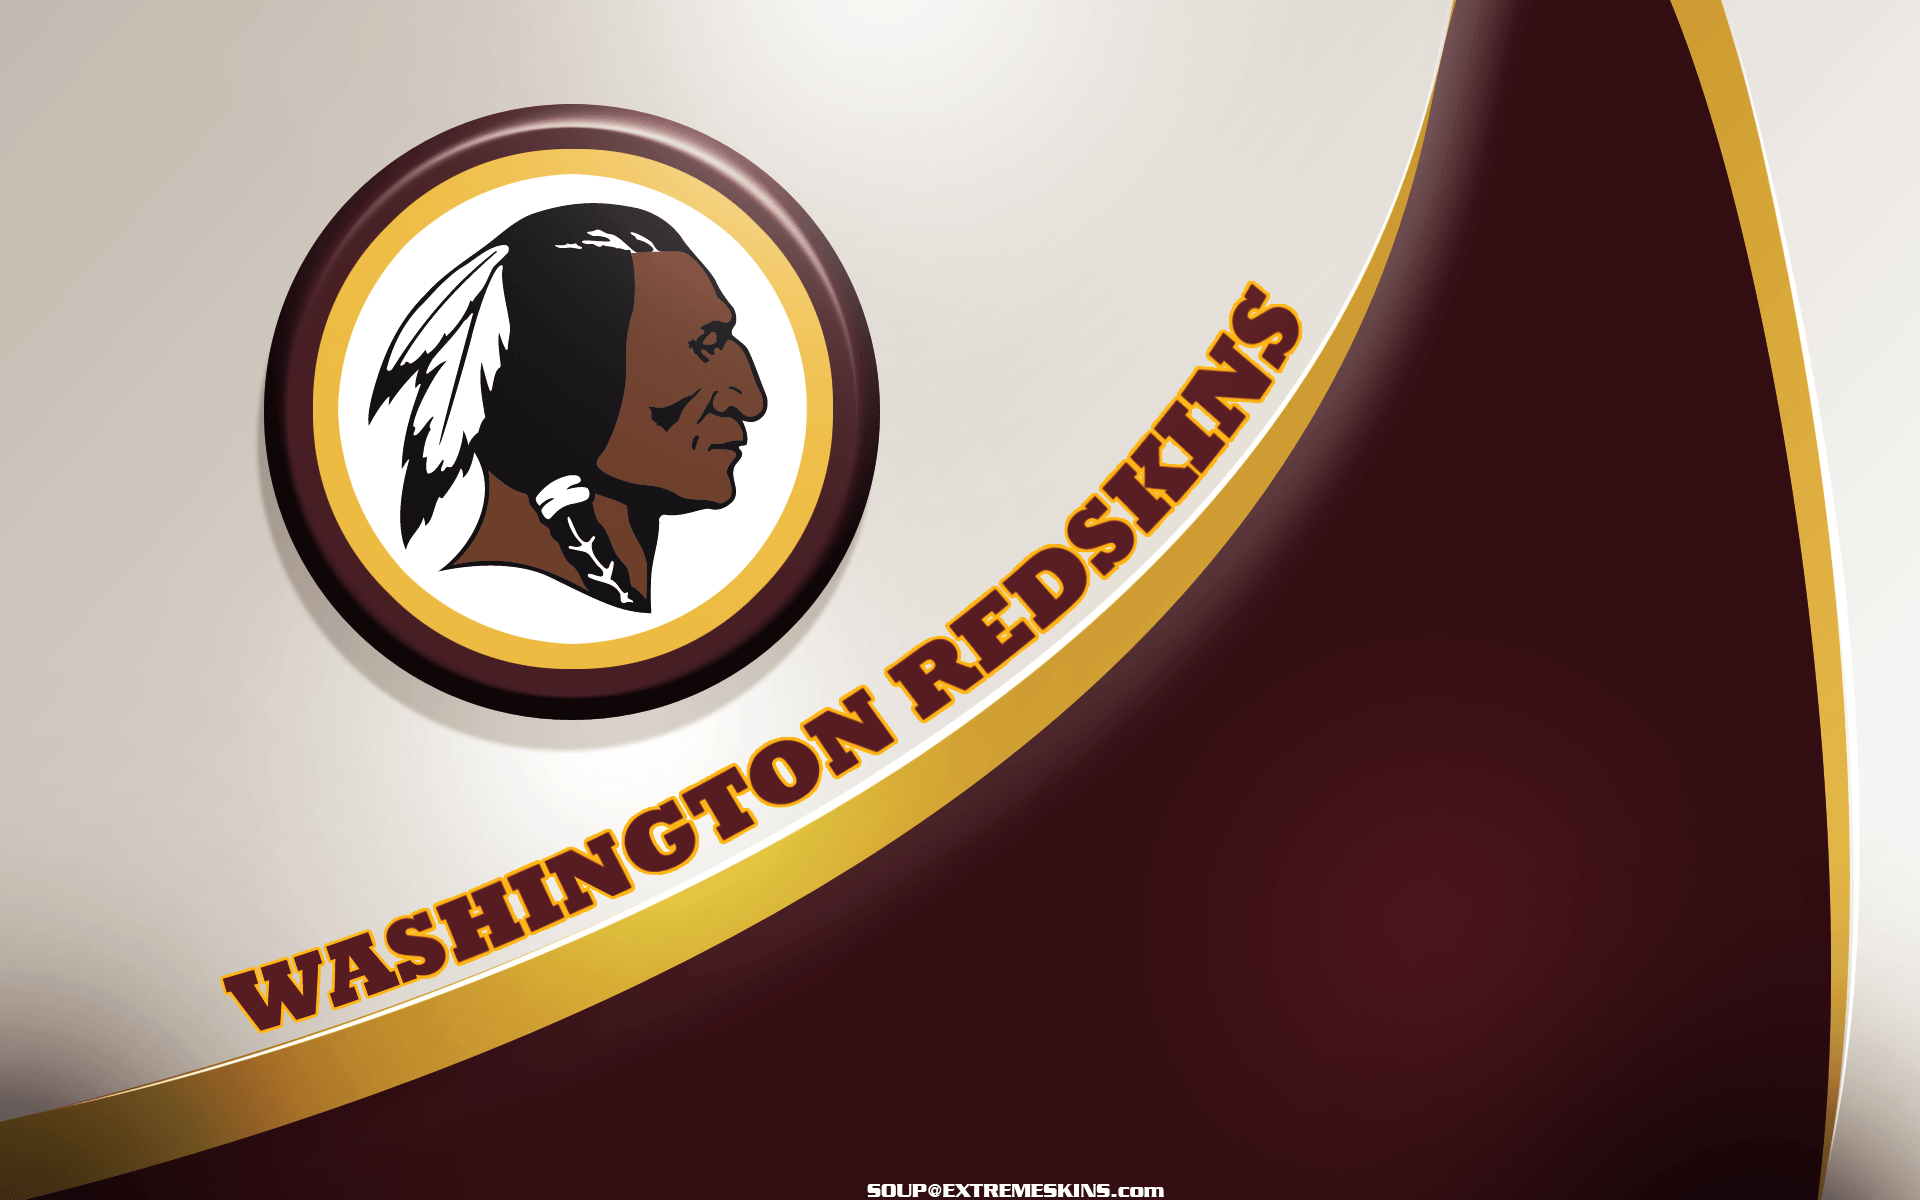 Washington Redskins wallpaper. Washington Redskins background